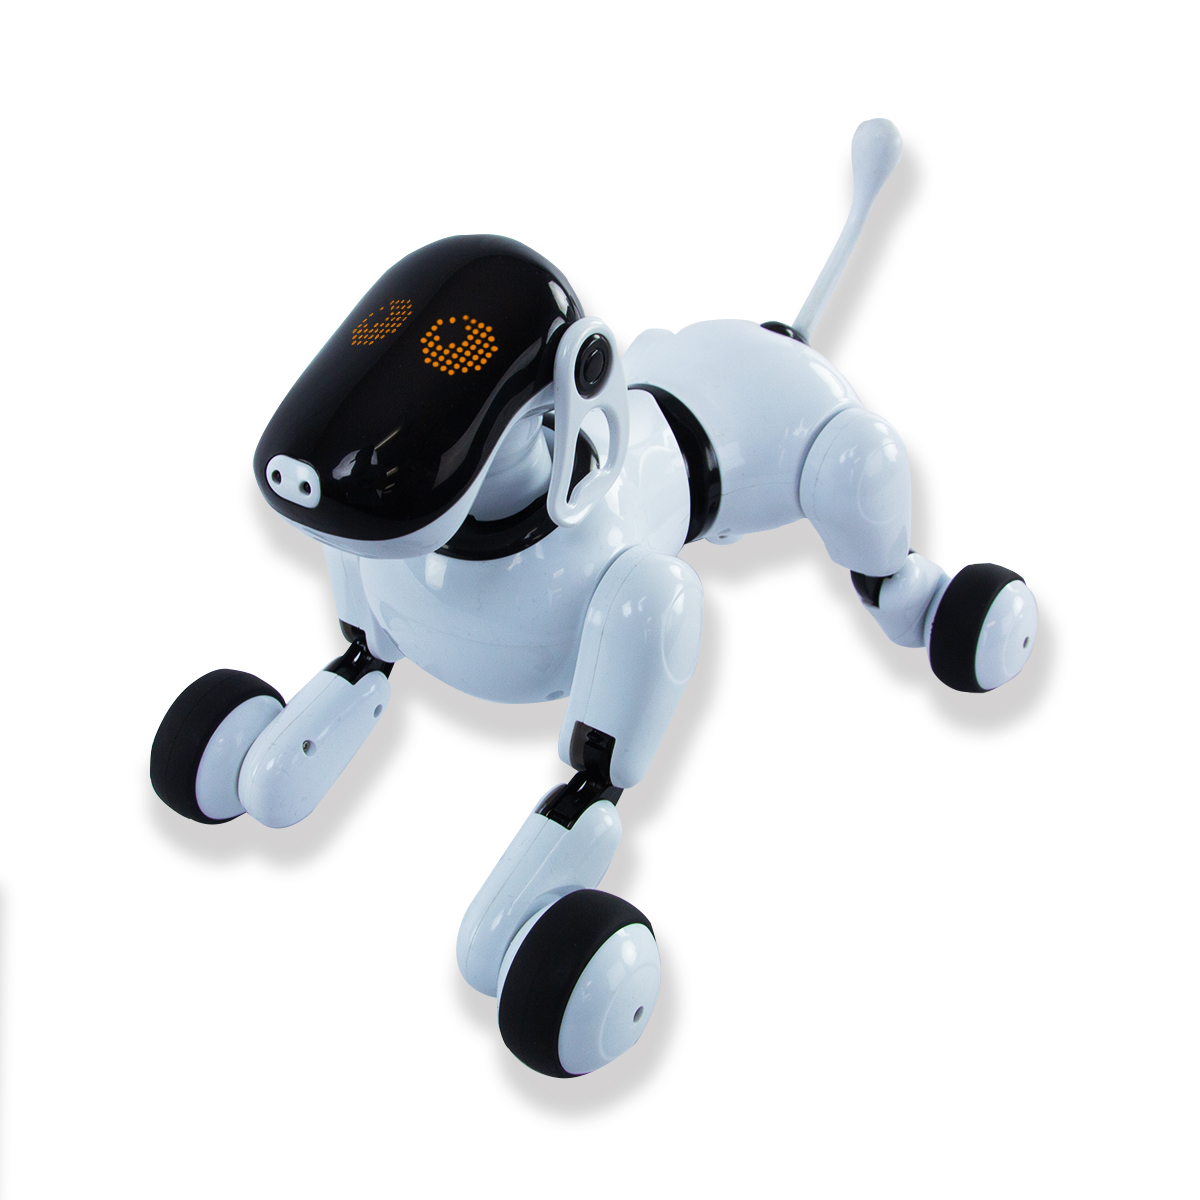 Your Interactive AI Robot Dog & Companion 